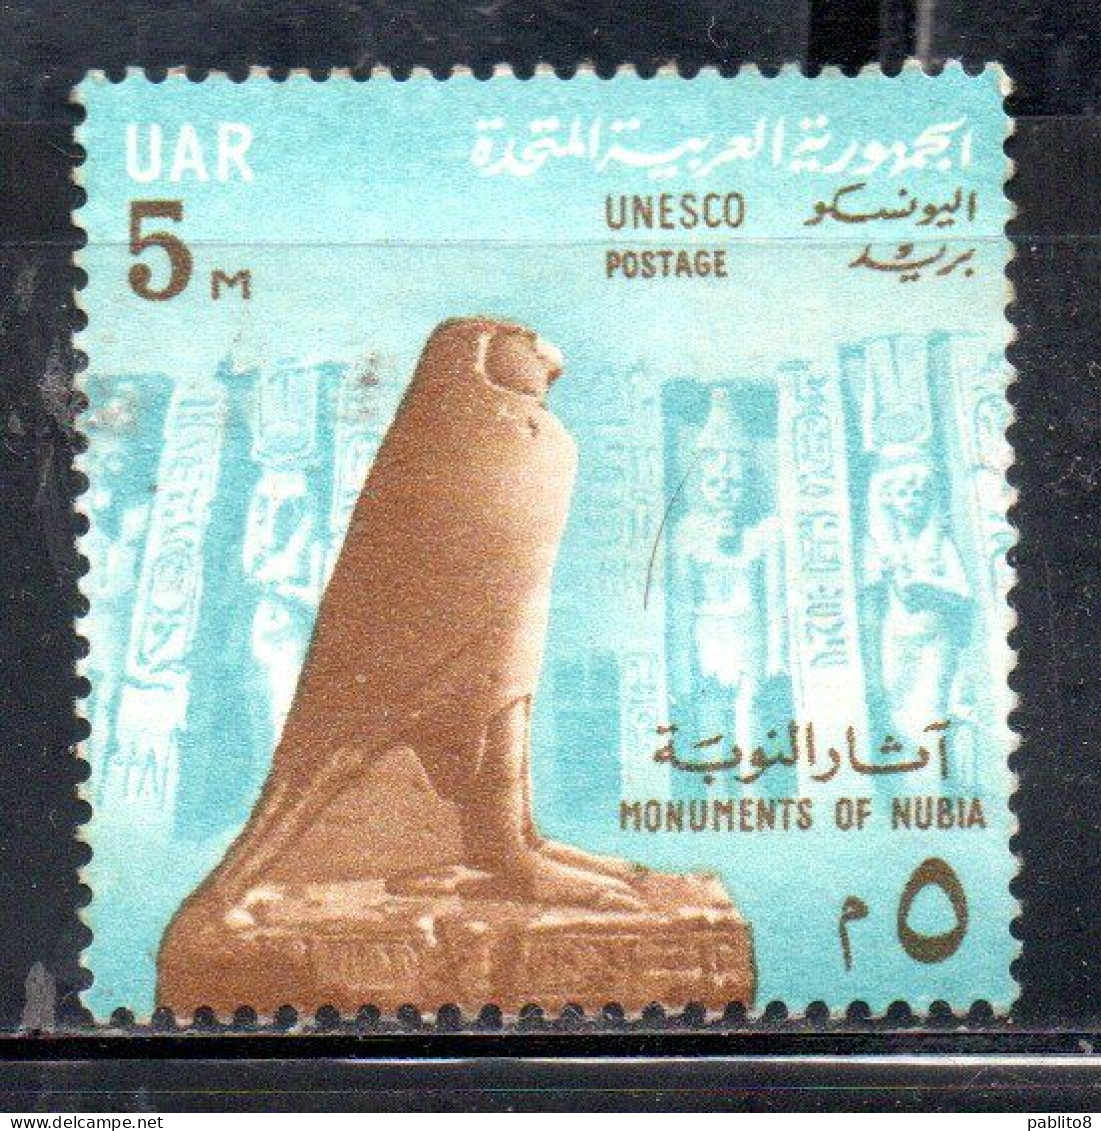 UAR EGYPT EGITTO 1964 SAVE THE MONUMENTS OF NUBIA CAMPAIGN HORUS AND FACADE OF NEFERTARI TEMPLE ABU SIMBEL 5m MH - Ongebruikt